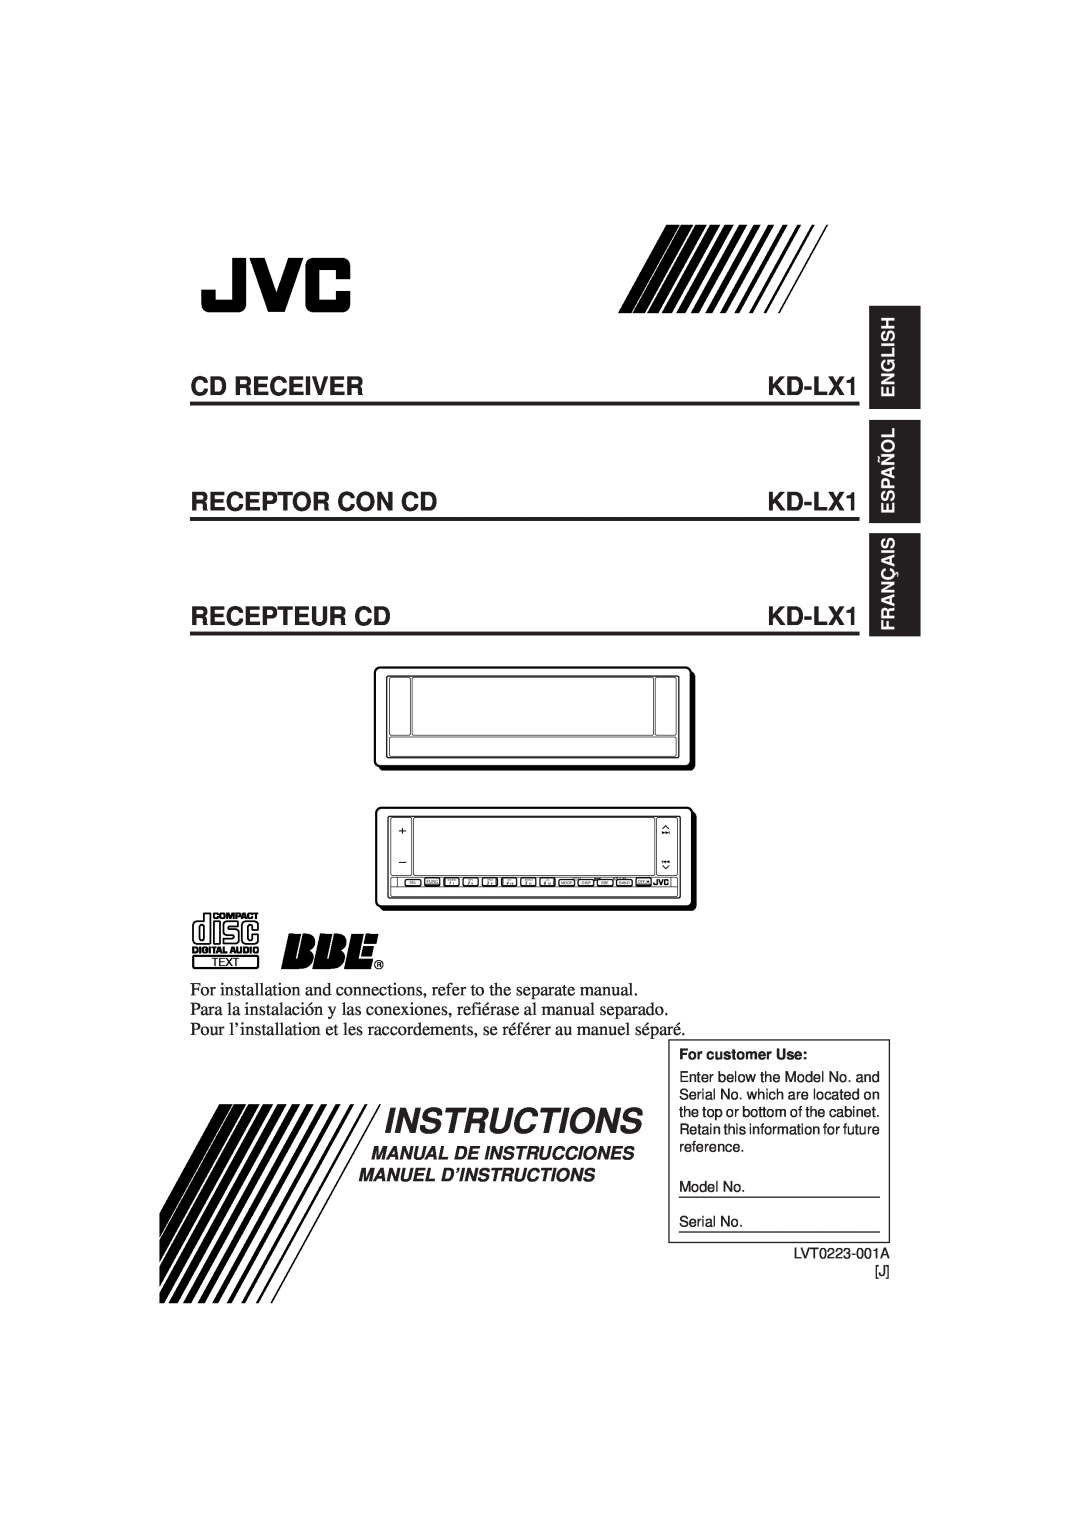 JVC manual Instructions, Français Español English, Cd Receiver Receptor Con Cd Recepteur Cd, KD-LX1 KD-LX1 KD-LX1 